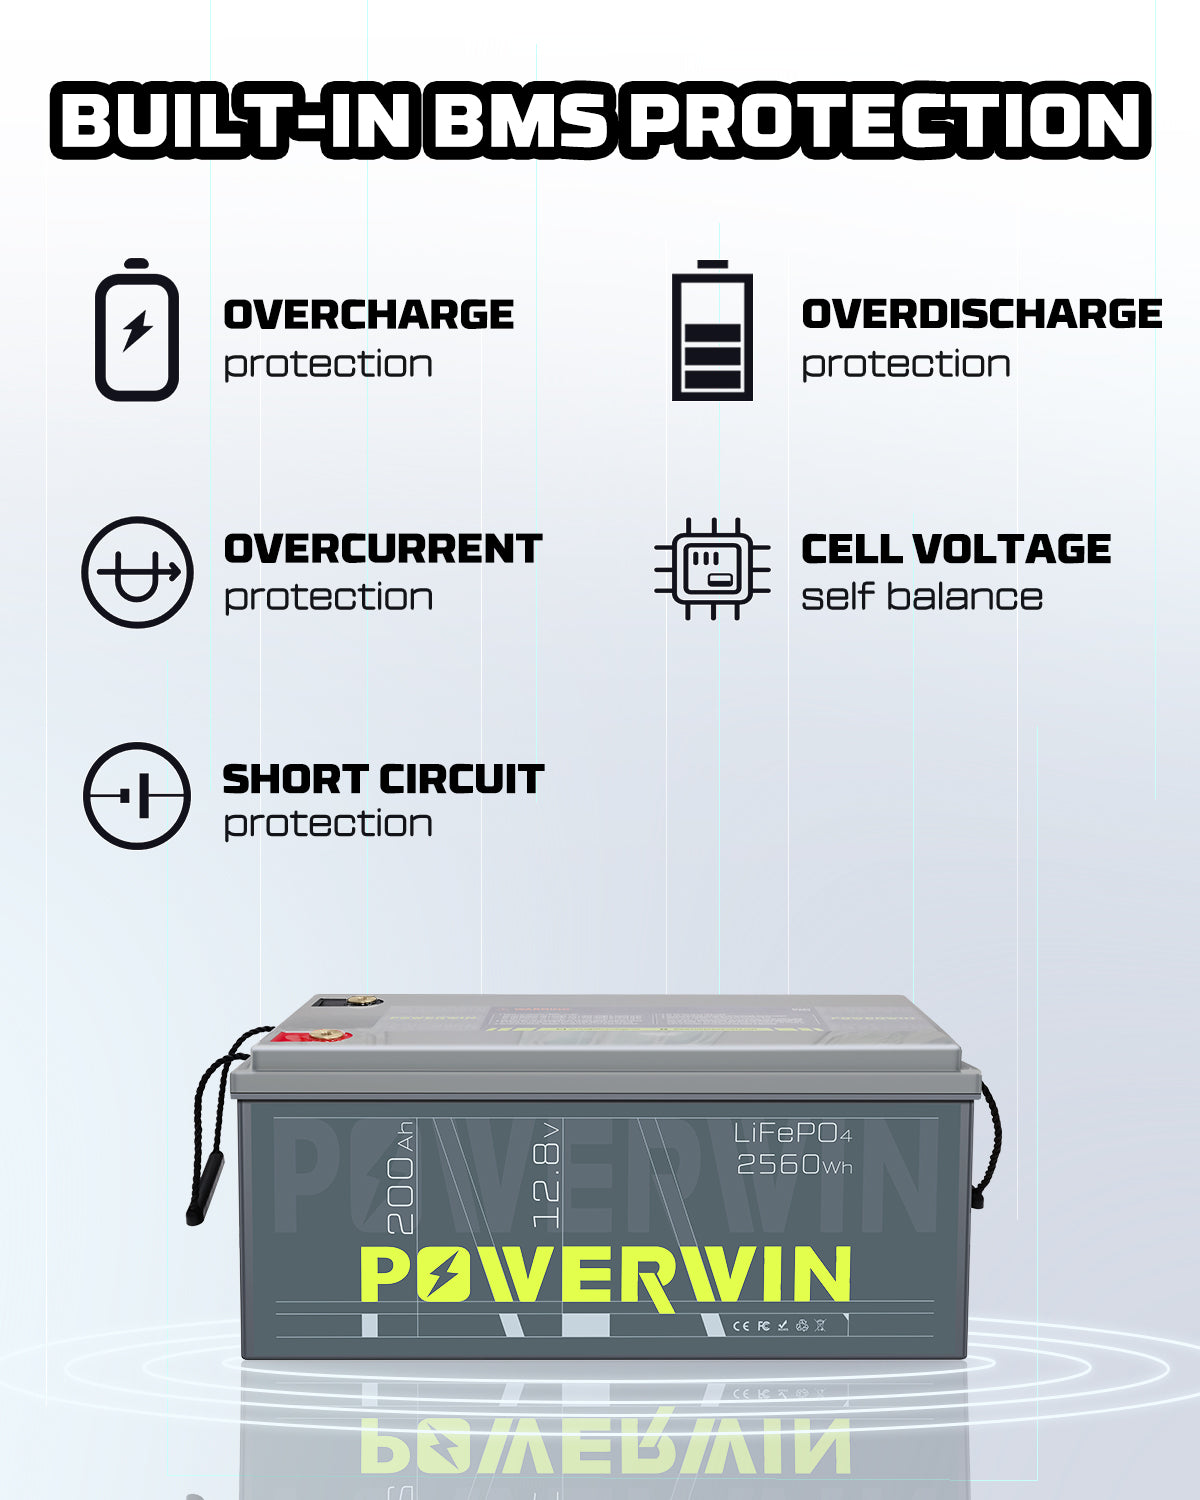 PowerWin LiFePO4 BT200 Battery